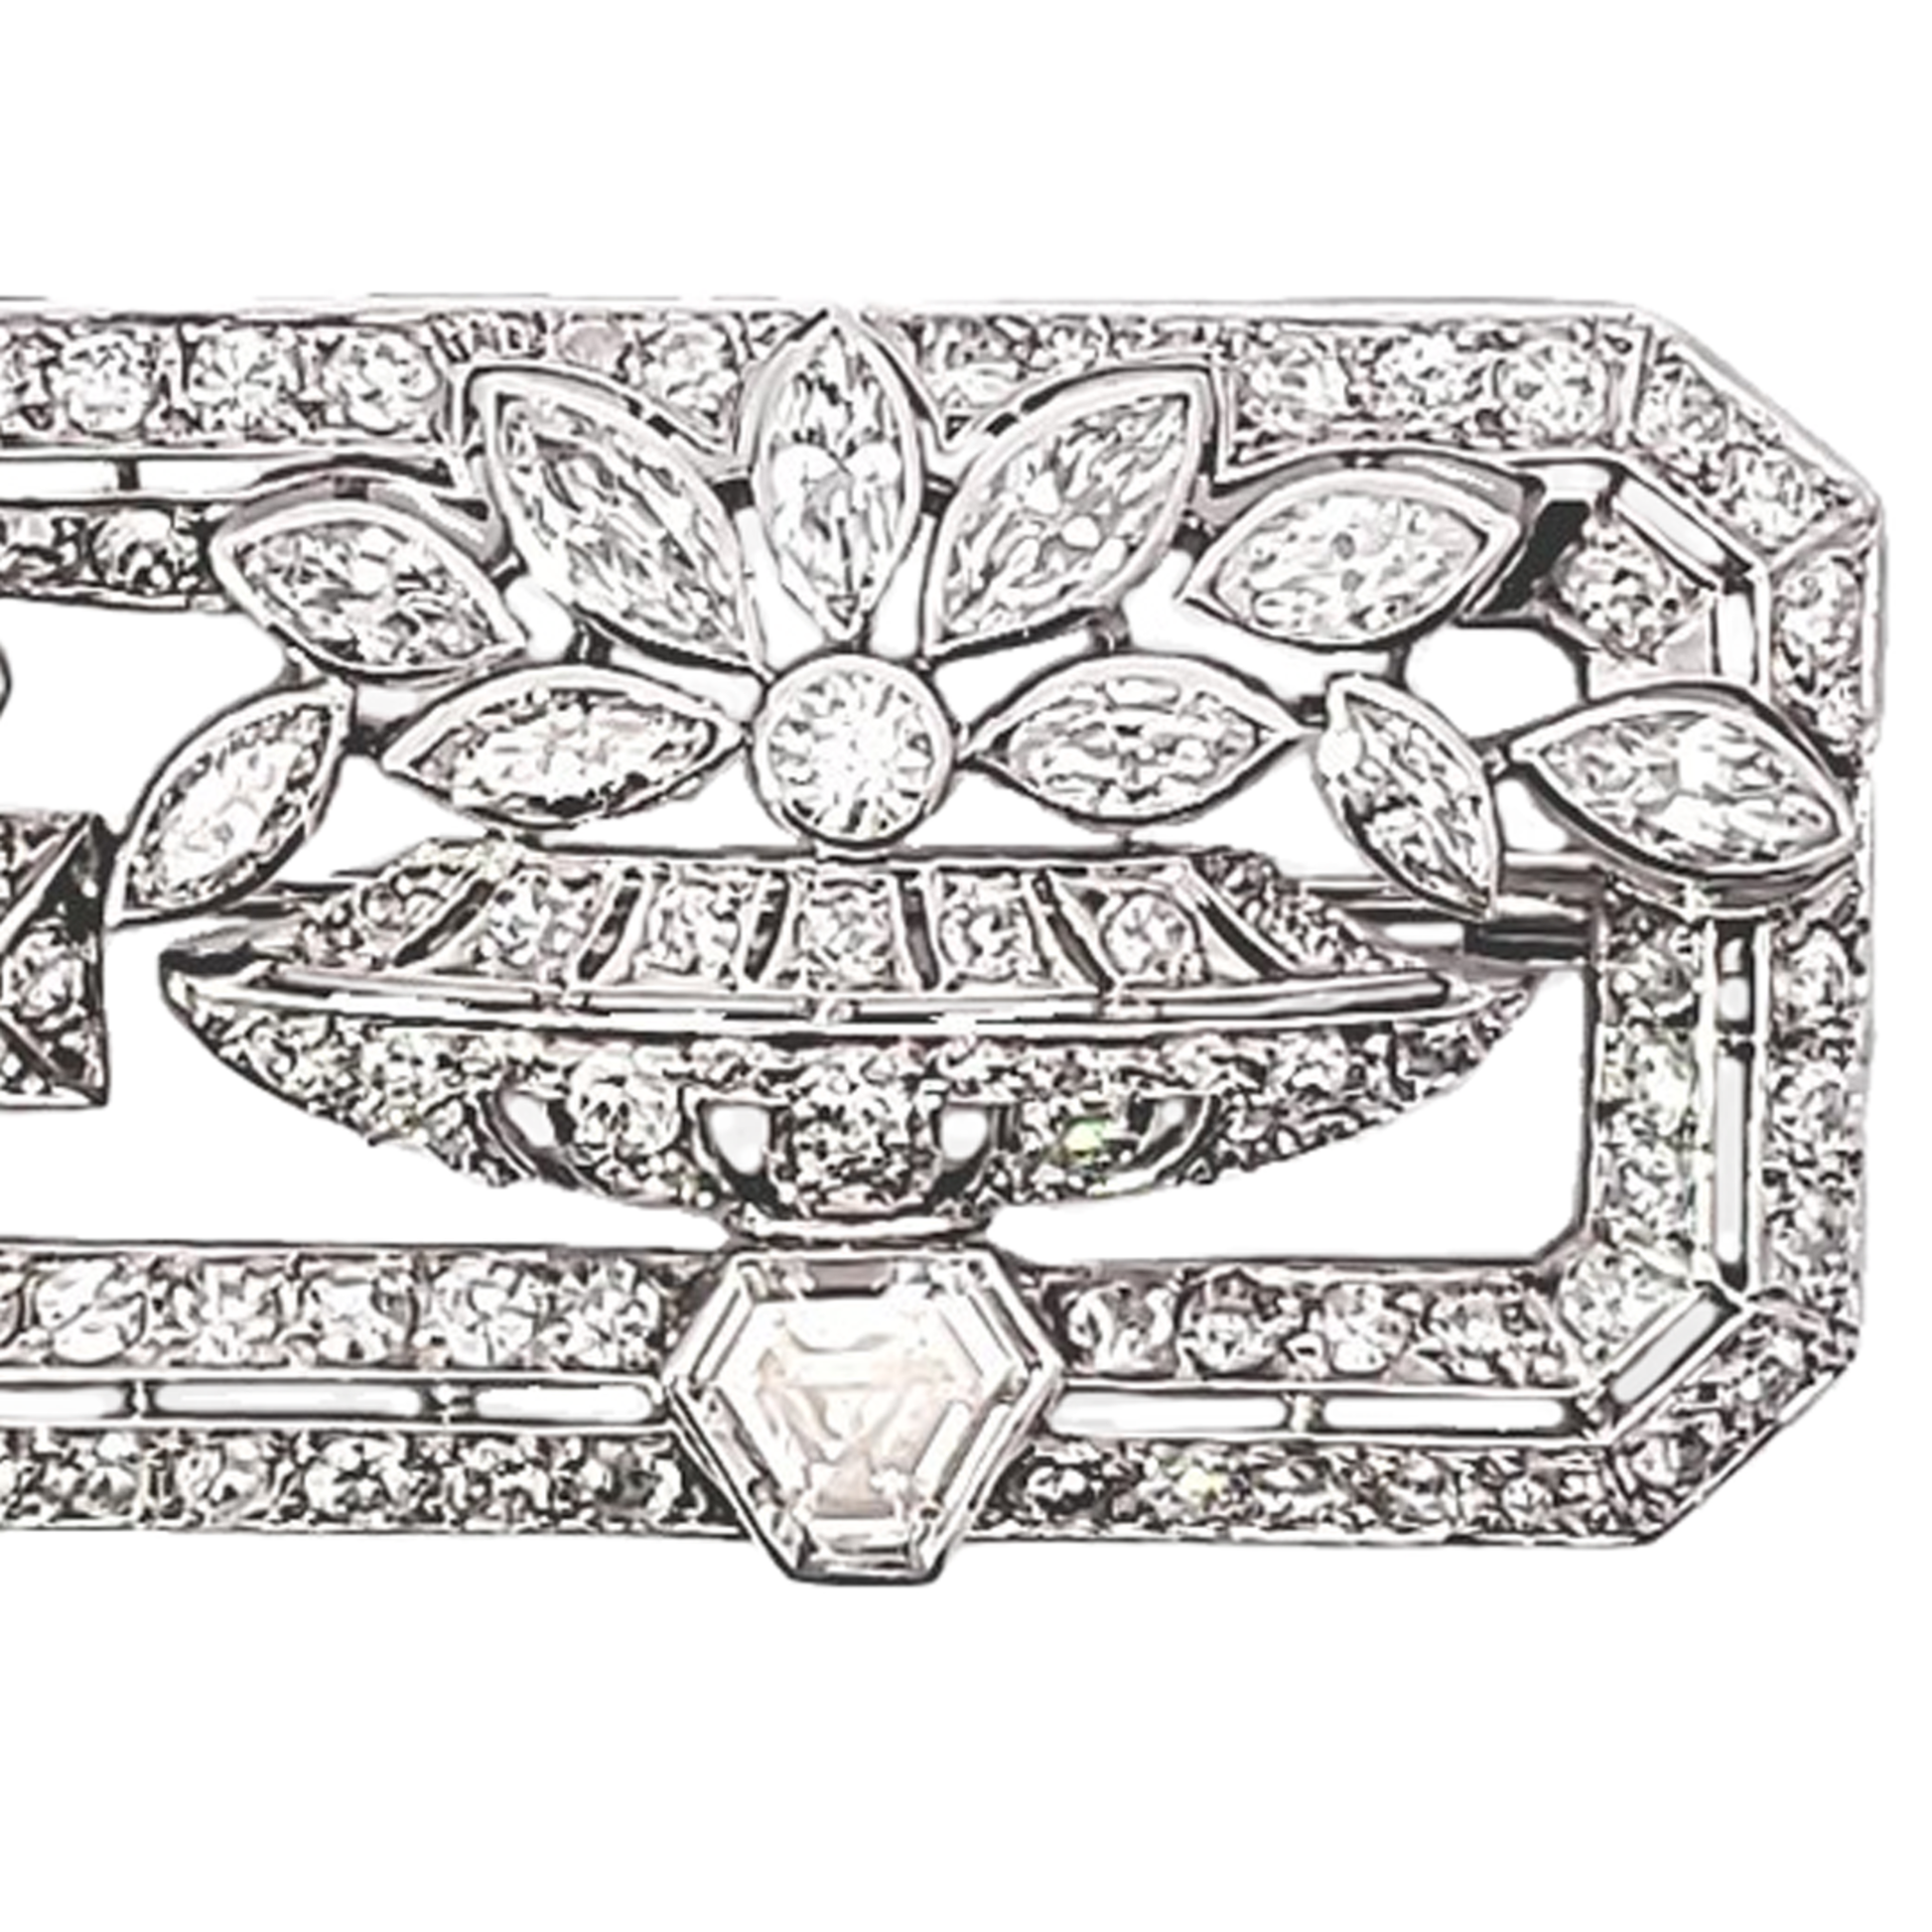 French Art Deco Platinum Diamond Brooch close-up details